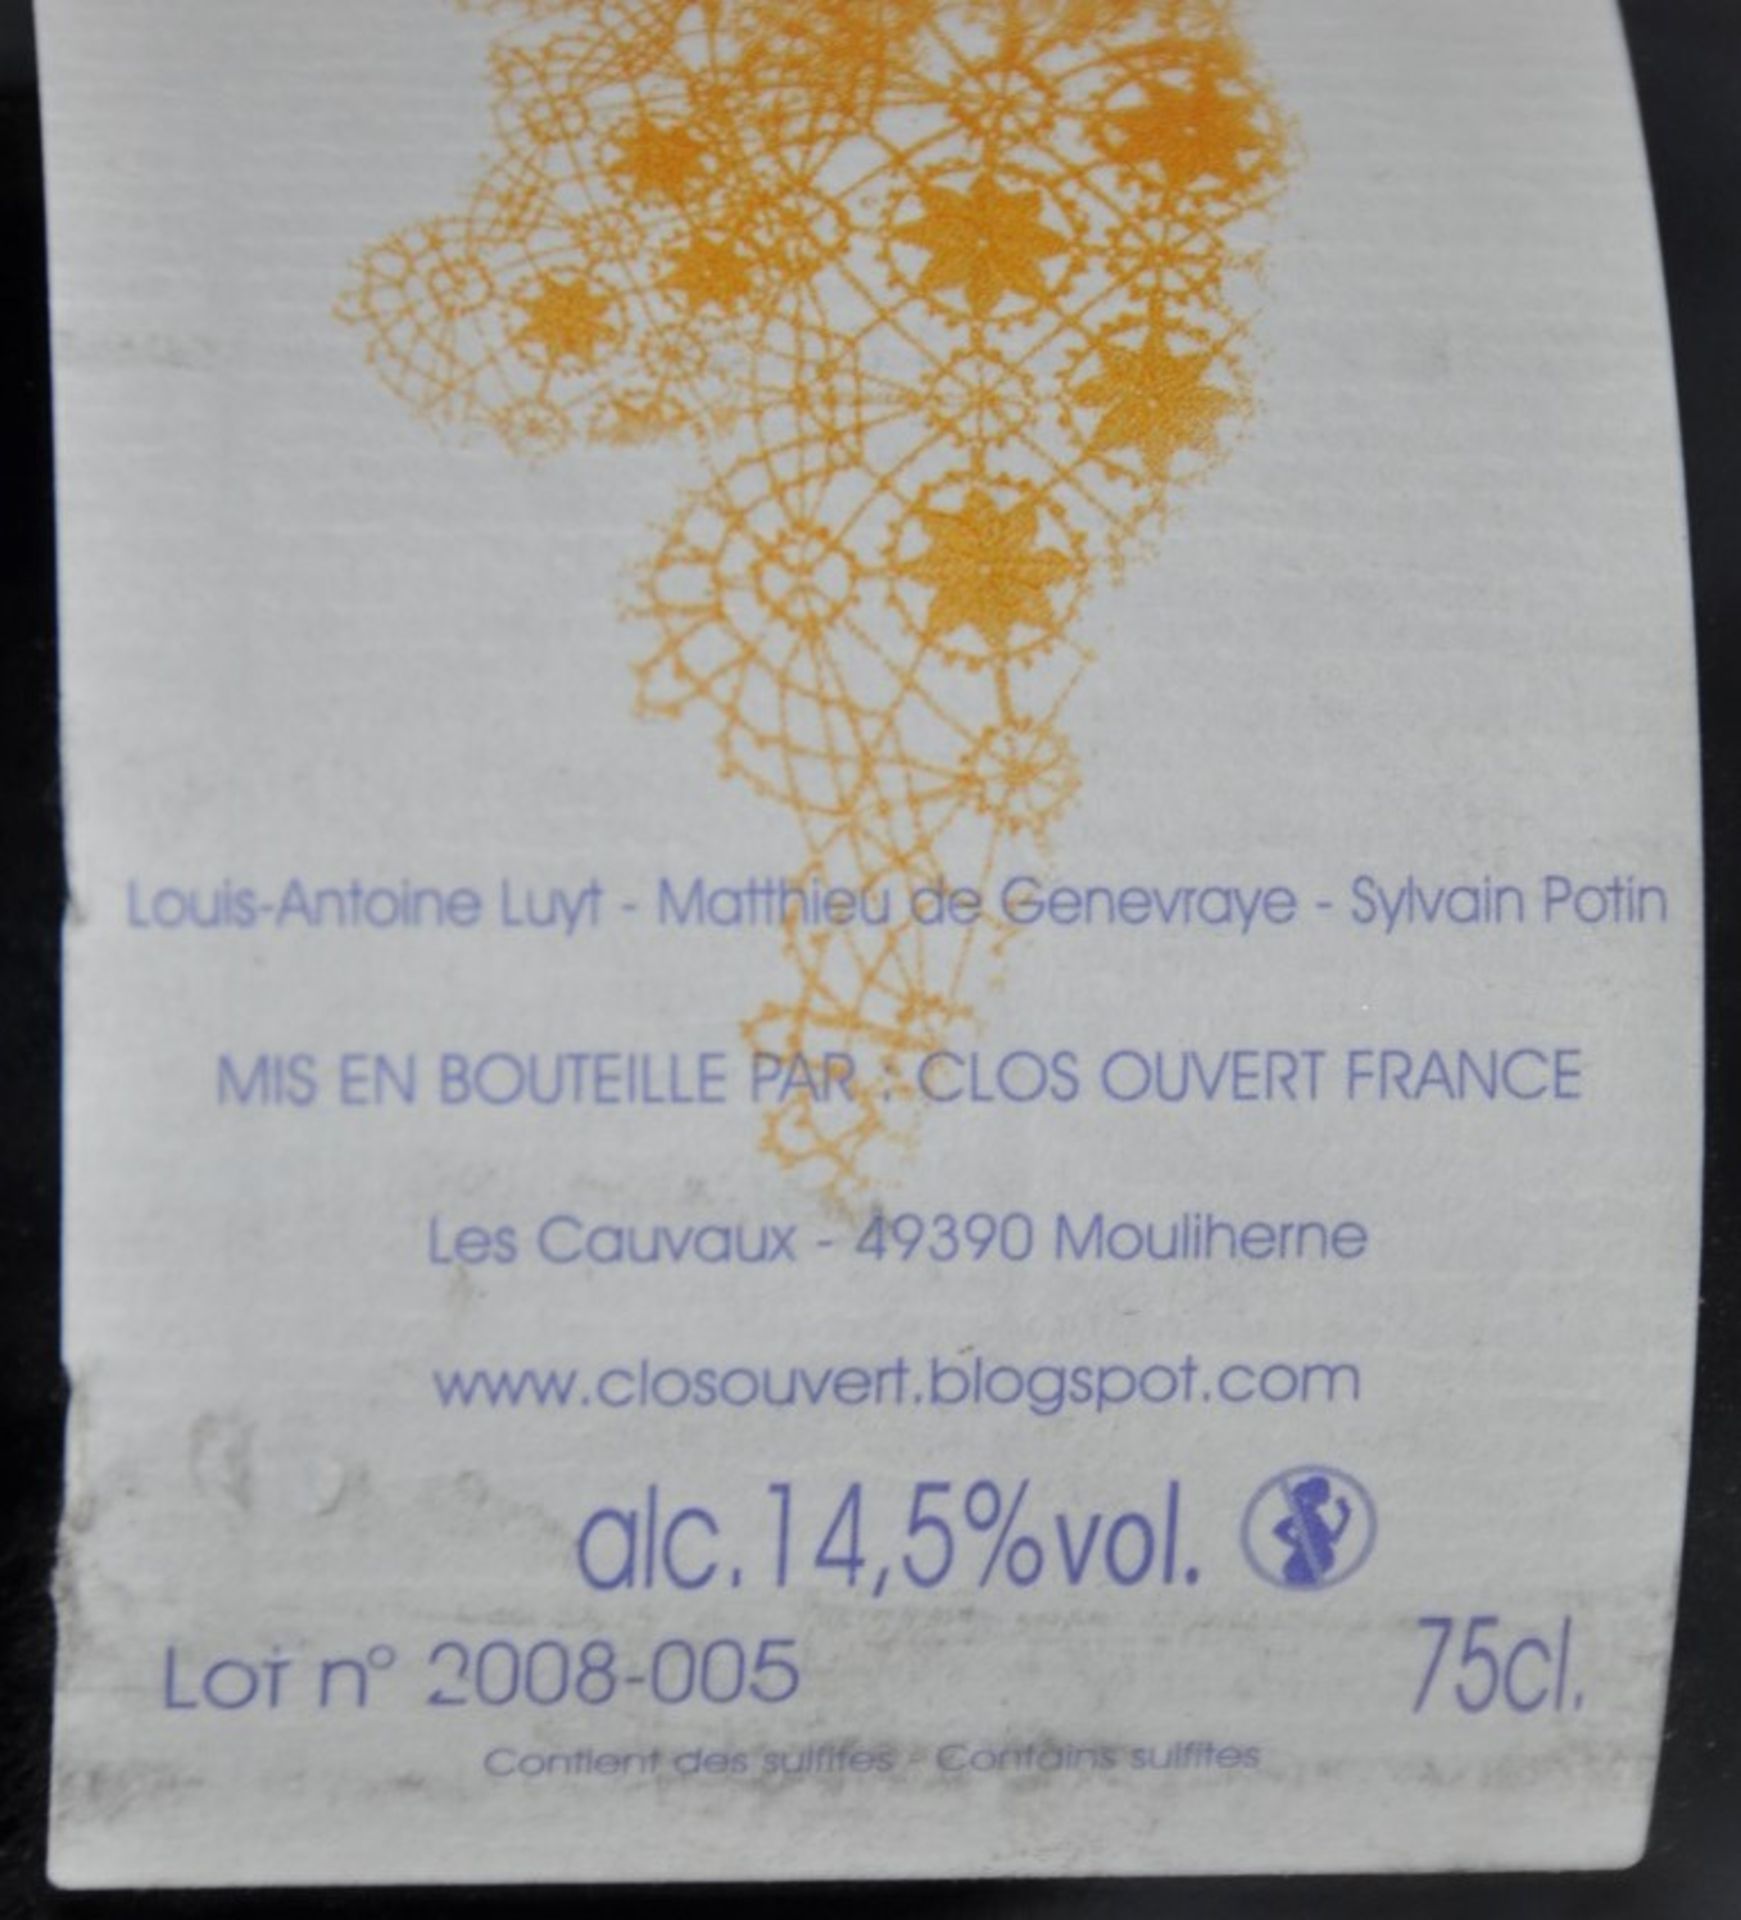 1 x Otono Clos Quyert Vino Puro Red Wine - French Wine - Year 2008 - Bottle Size 75cl - Volume 14.5% - Image 2 of 3